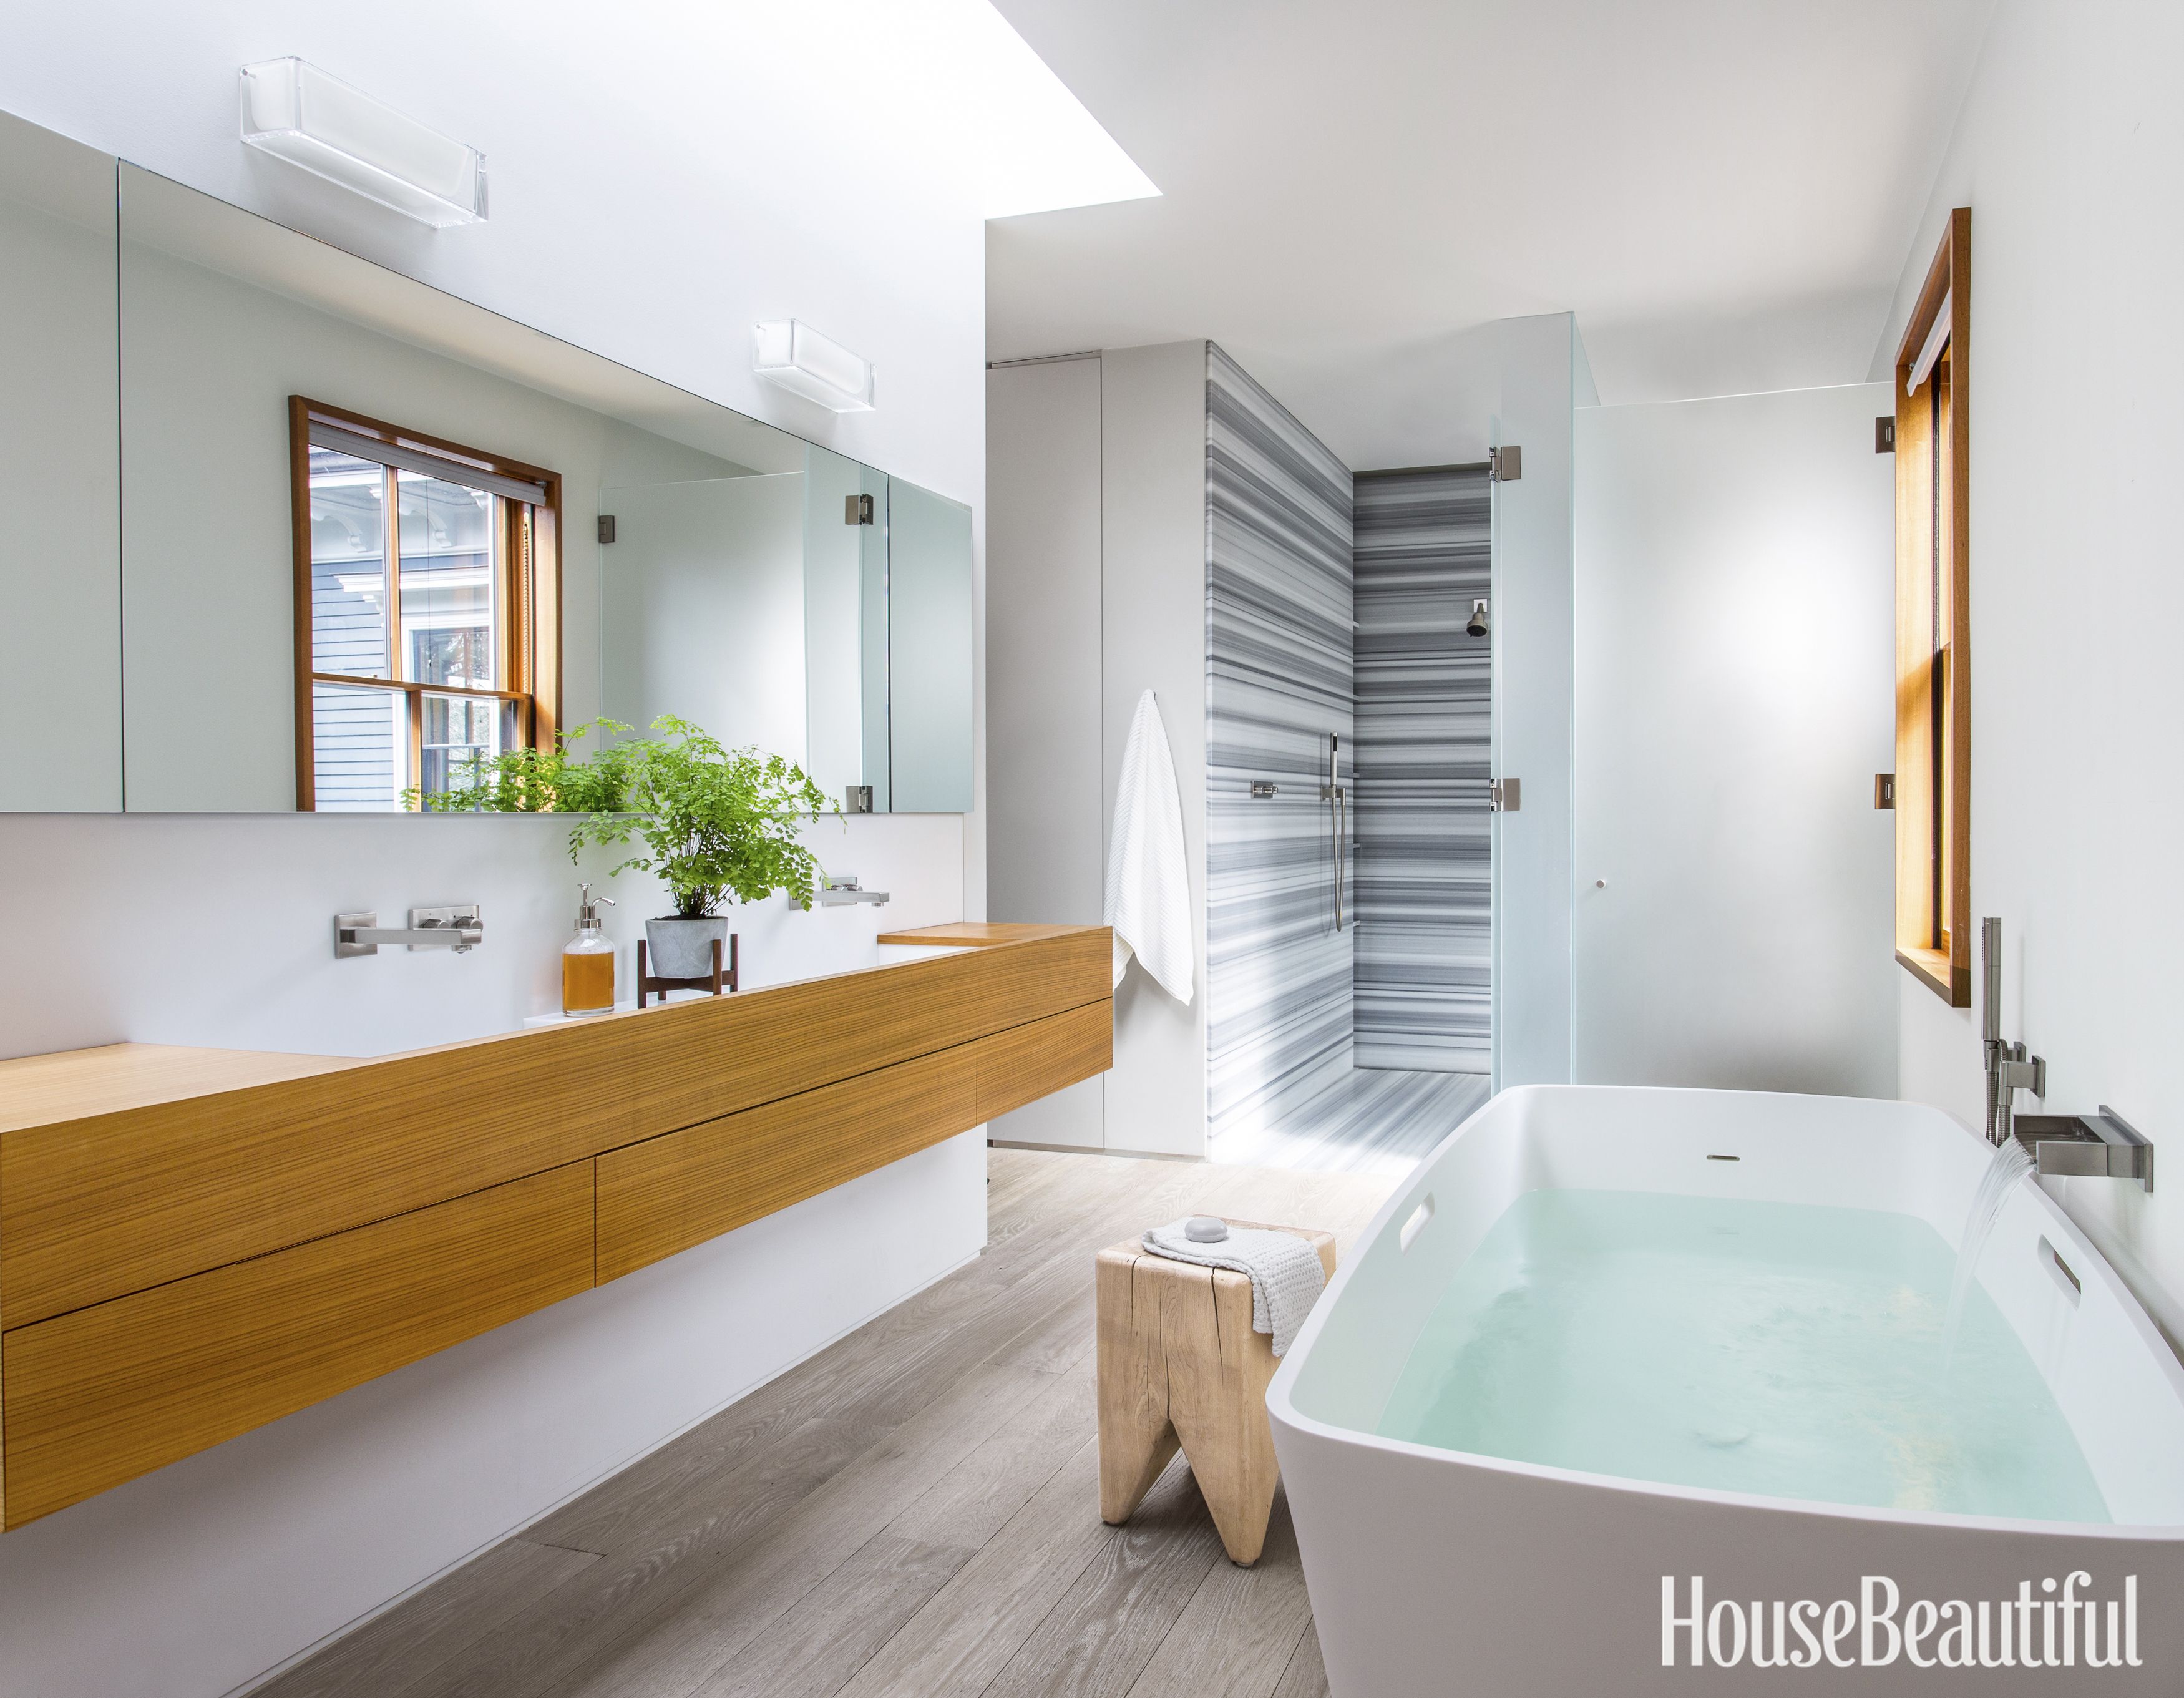 80 Best Bathroom Design Ideas Photos Of Beautiful Modern Bathrooms